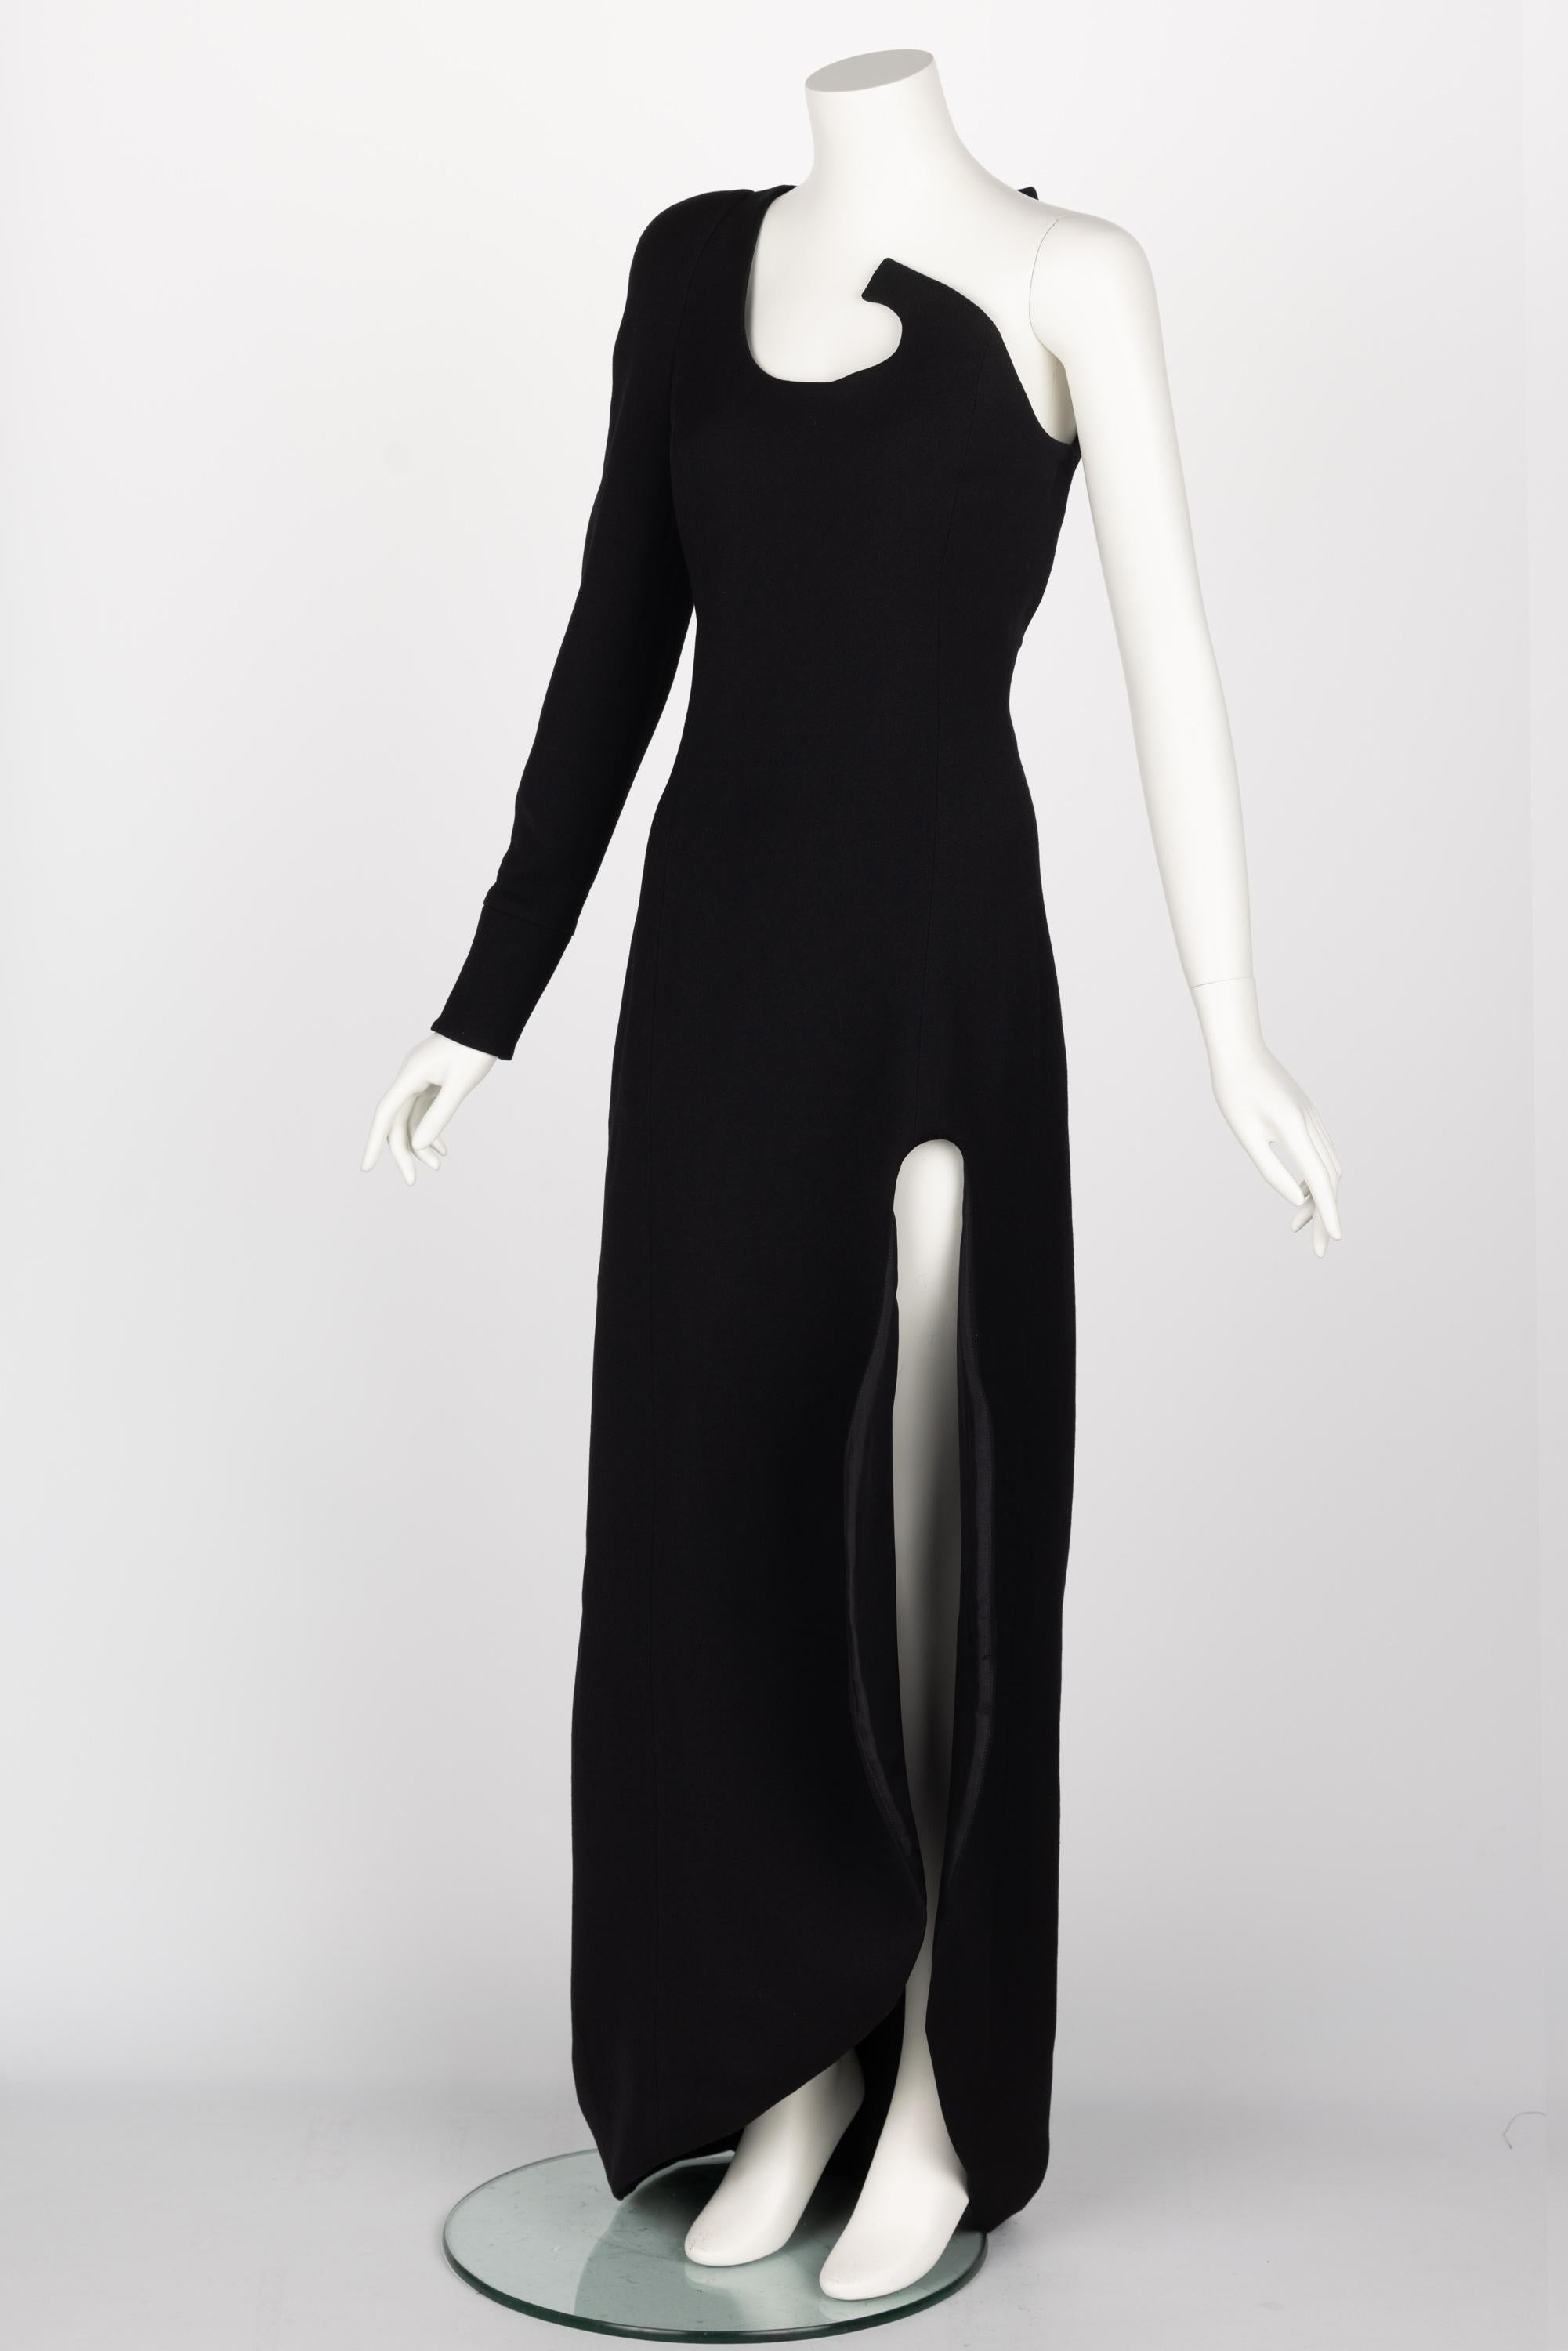 Ronald van der Kemp Demi Couture Fall 2018 Sculptural Black Dress  For Sale 7